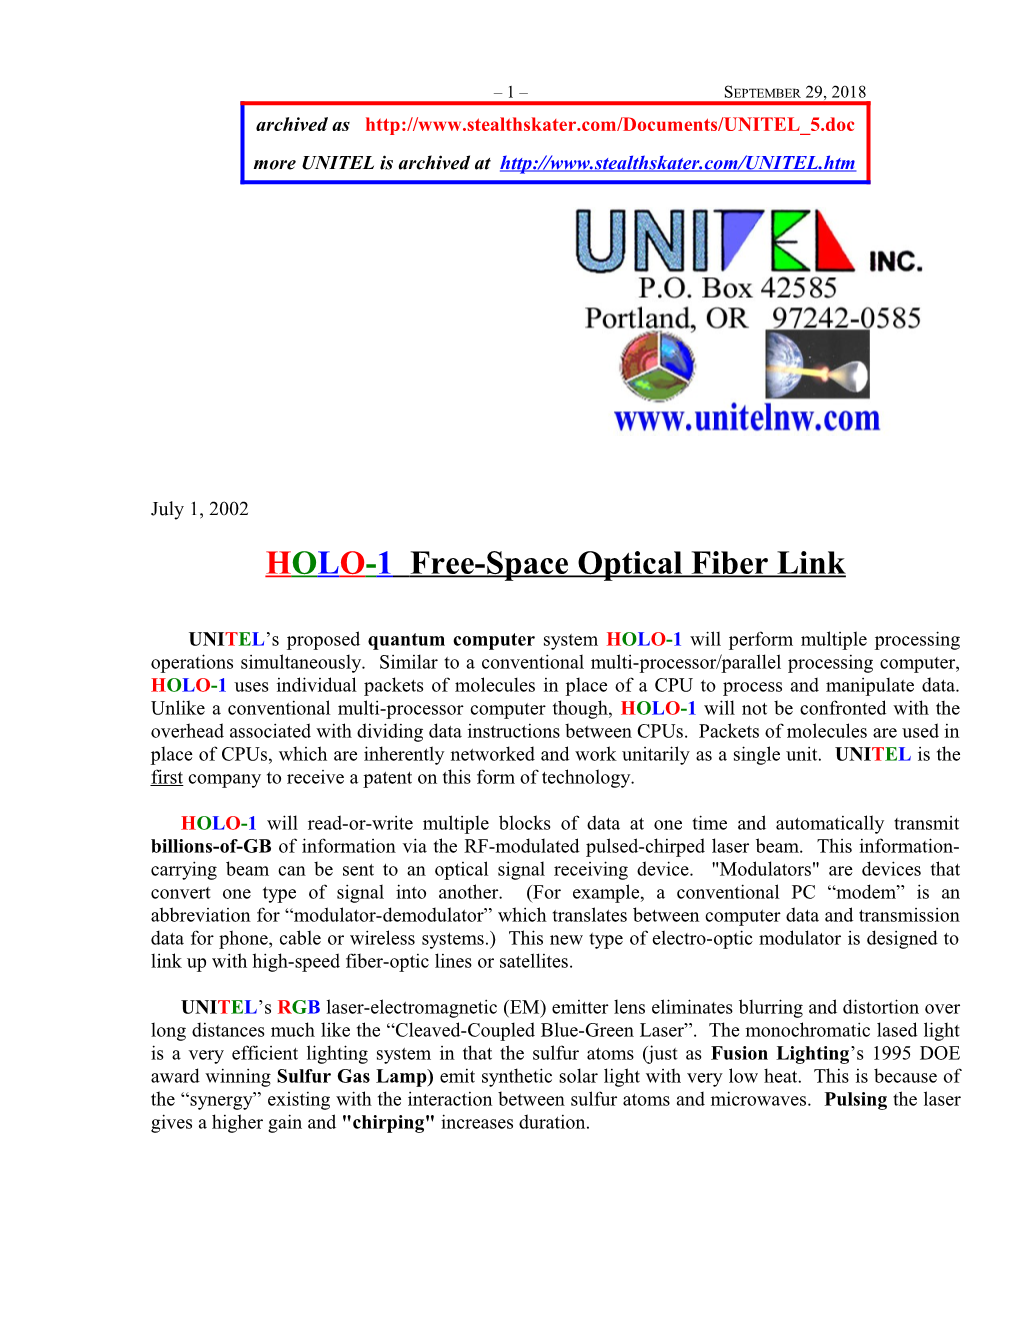 HOLO-1 Free-Space Optical Fiber Link